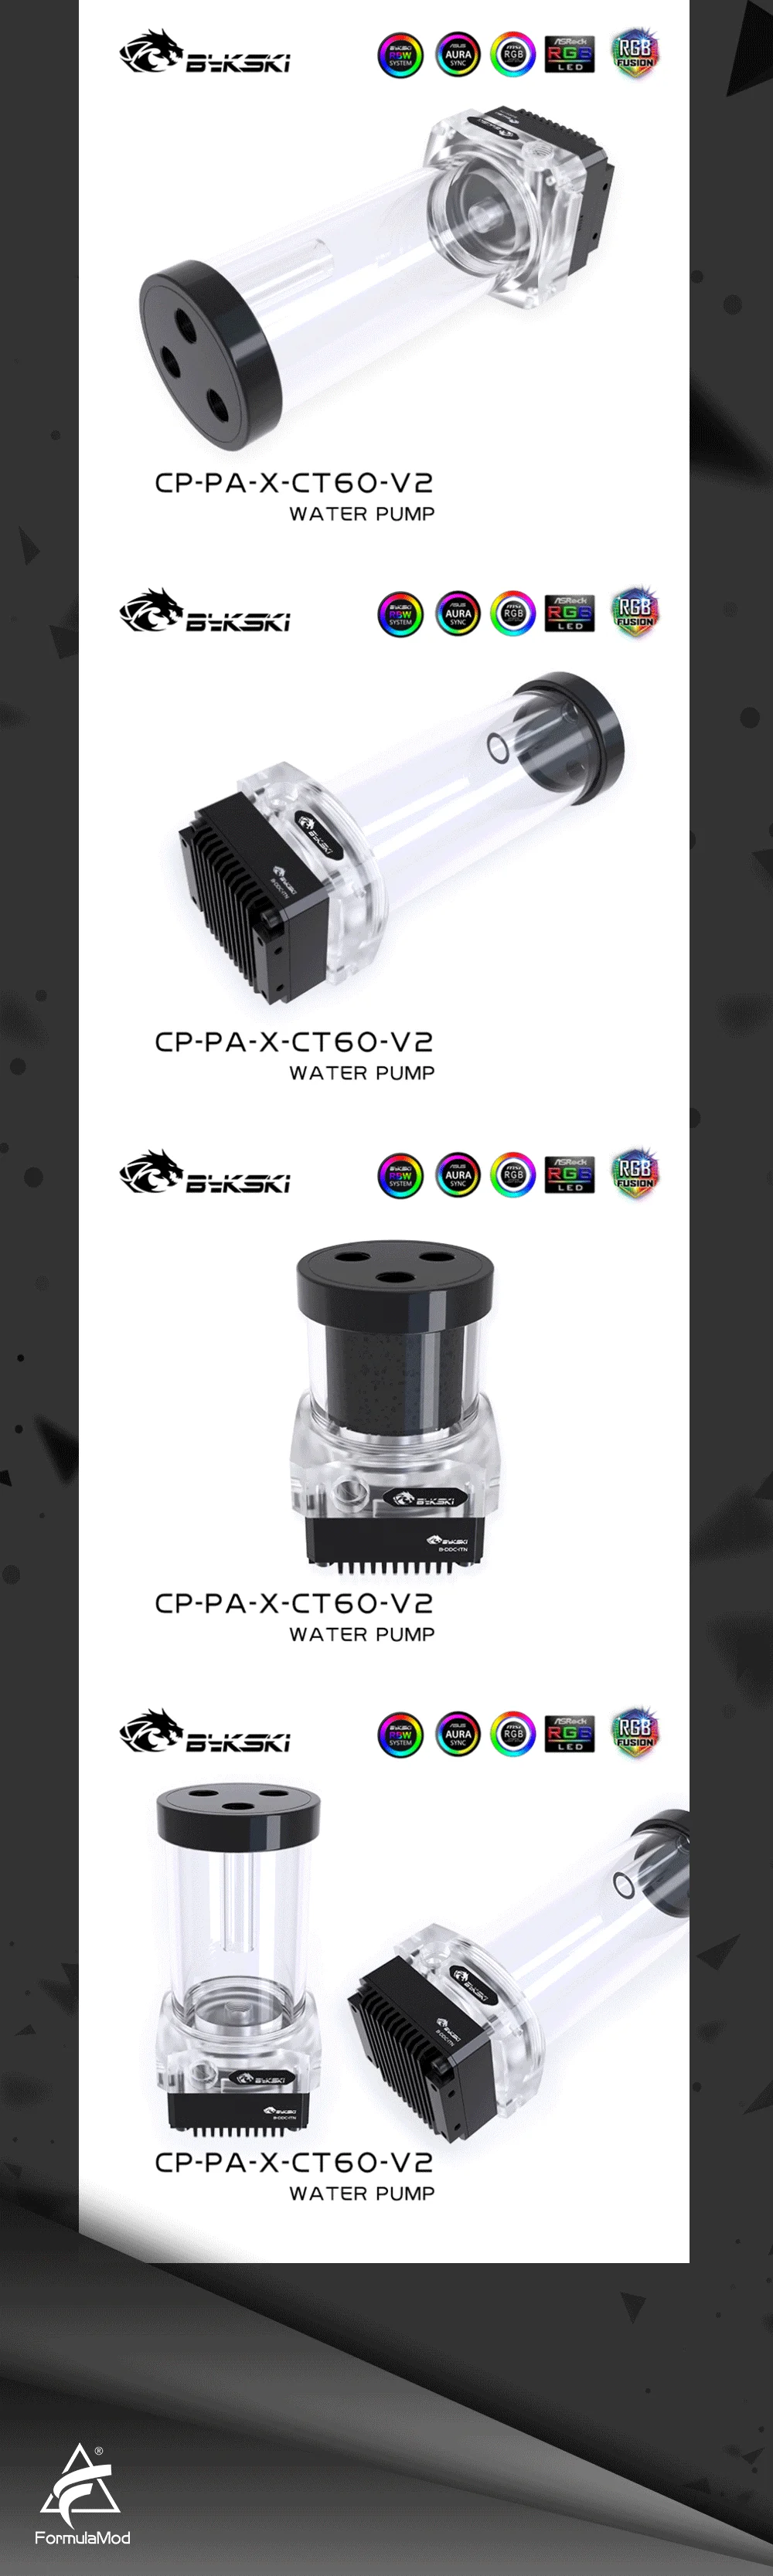 Bykski CP-PA-X-CT60 / CP-PA-X , Pump-reservoir Combination , 10W Pump With Lighting Max Flow 300L/H Max Head 3M  